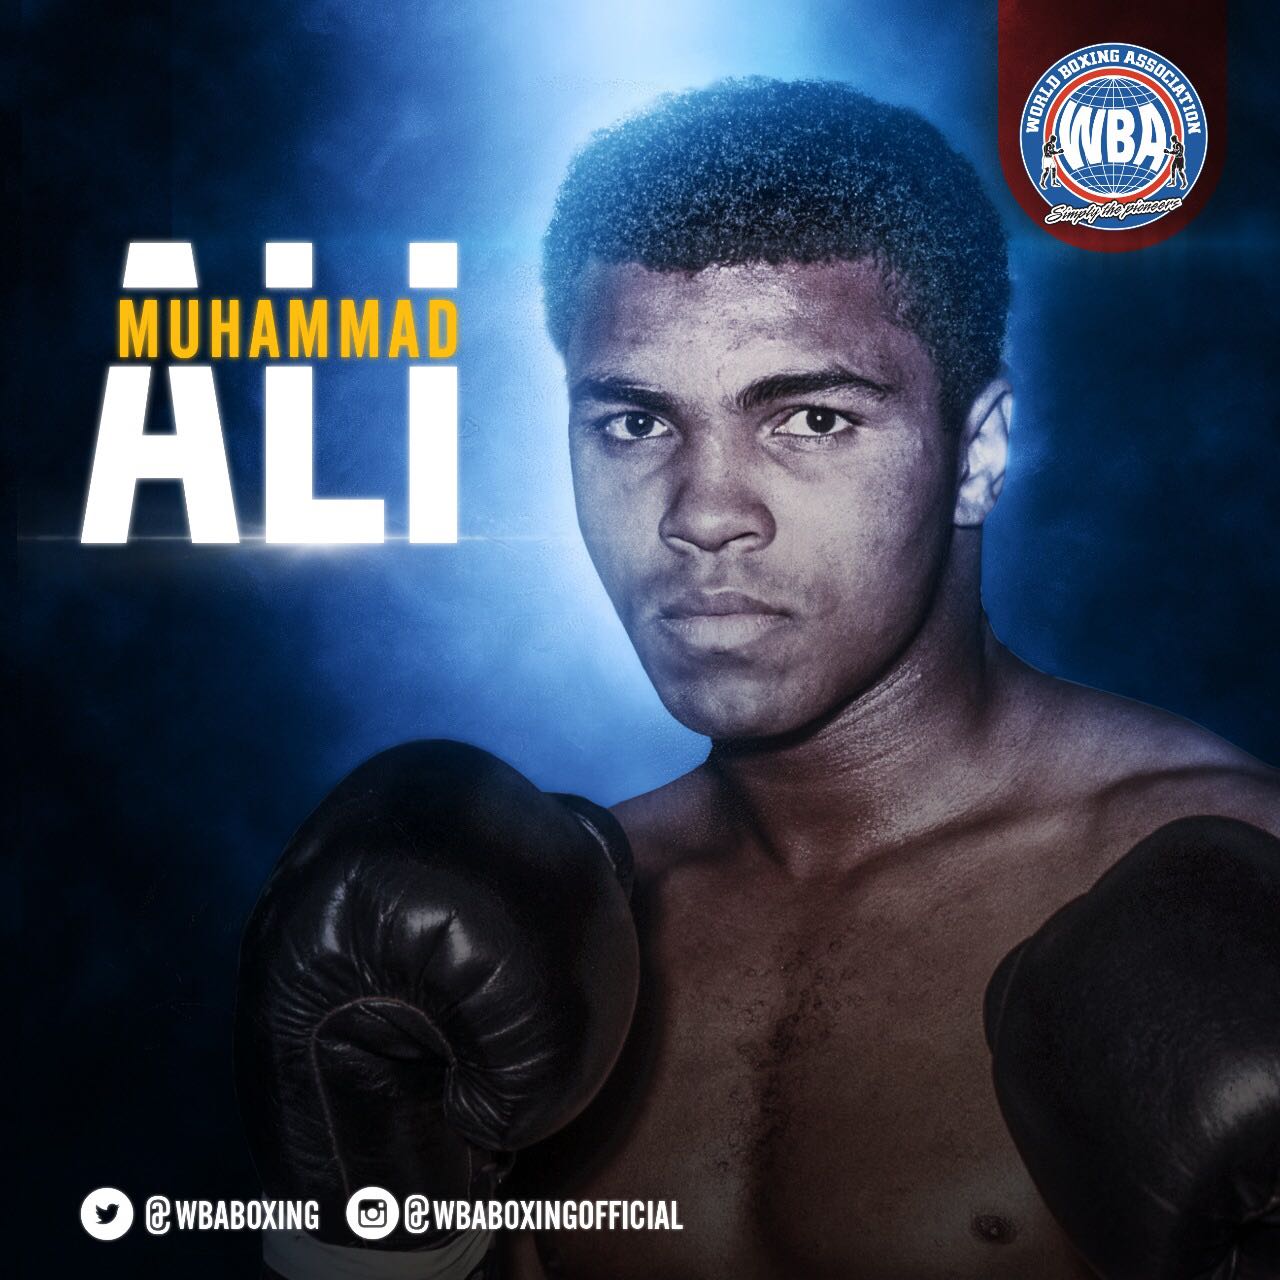 Let’s remember Muhammad Ali